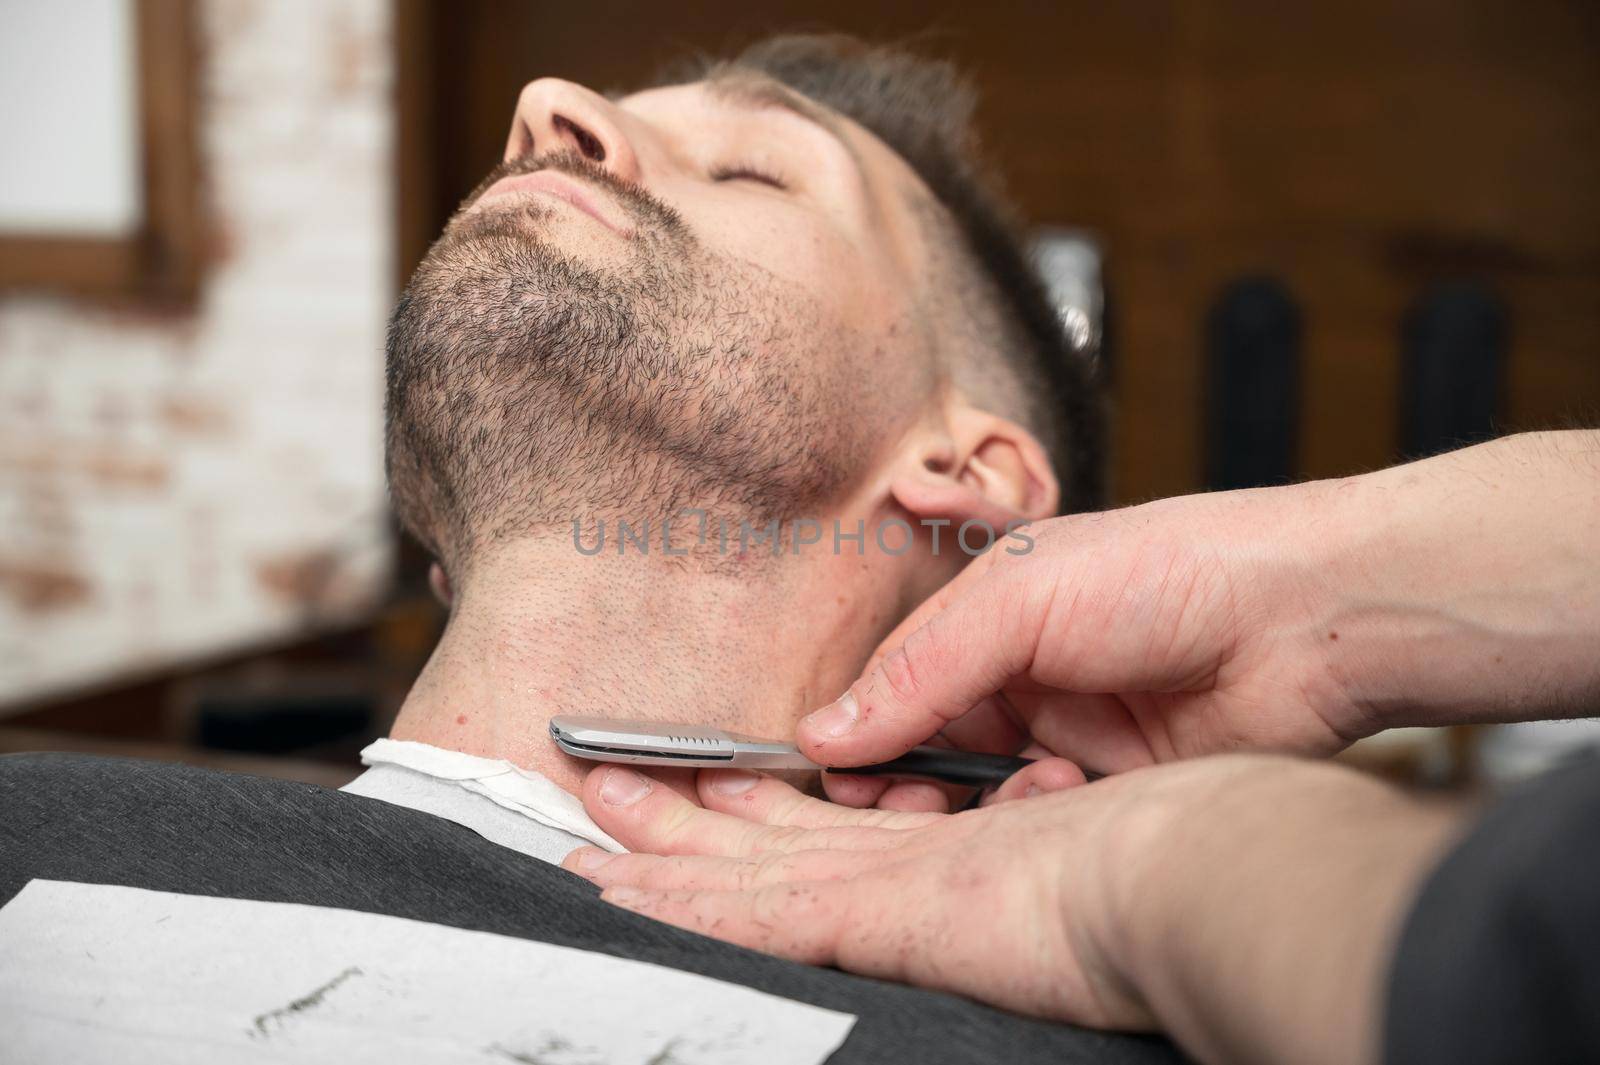 Barber shaving bearded male with a sharp razor by HERRAEZ